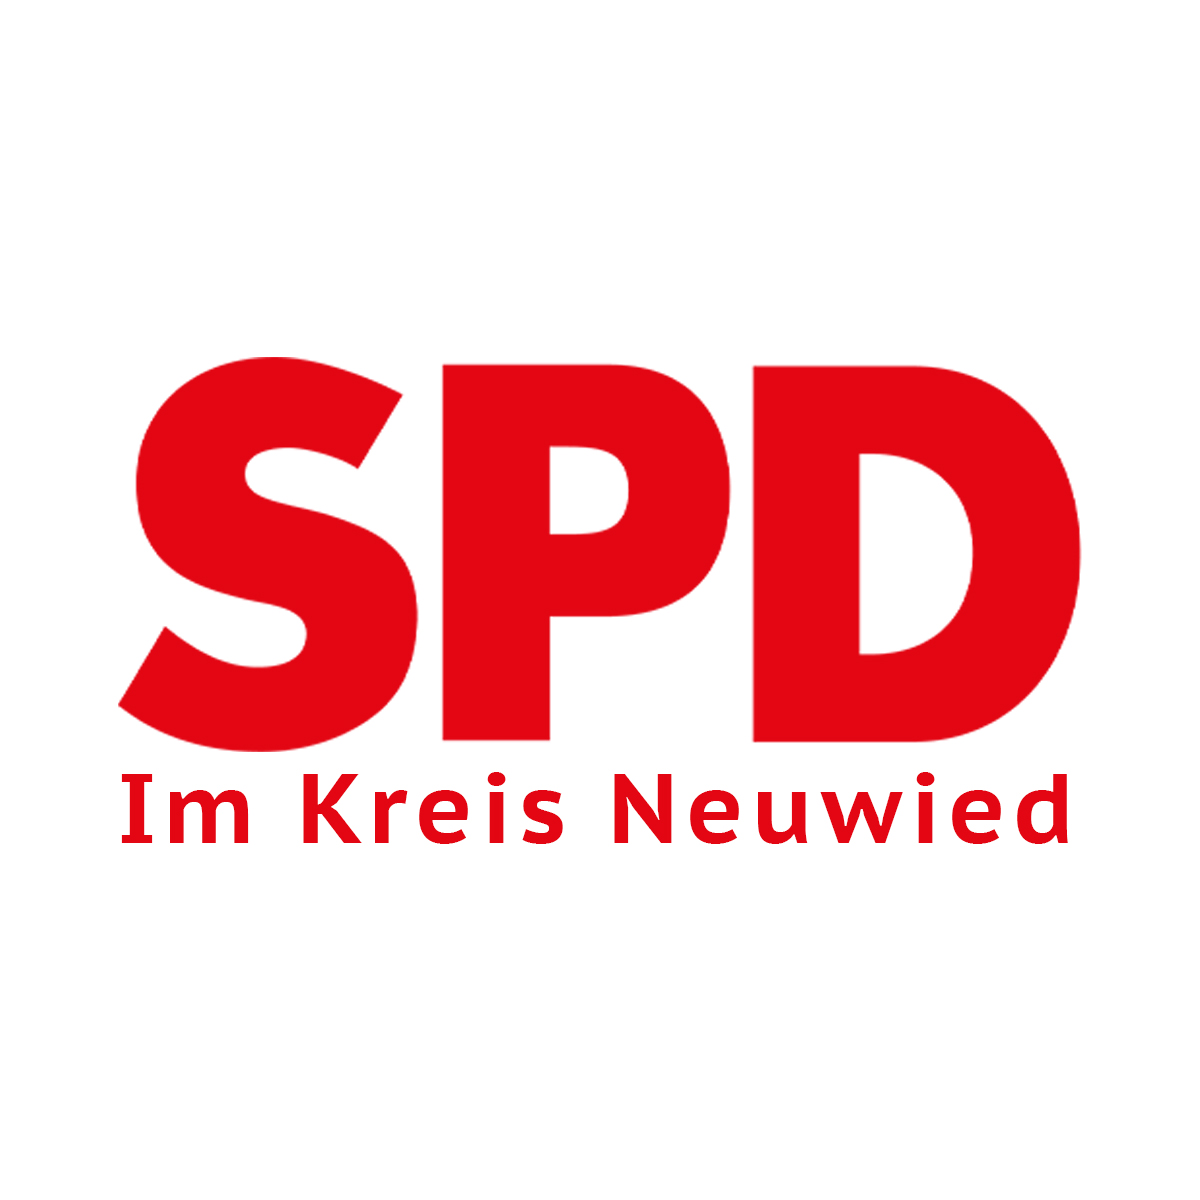 (c) Spd-kreis-neuwied.de